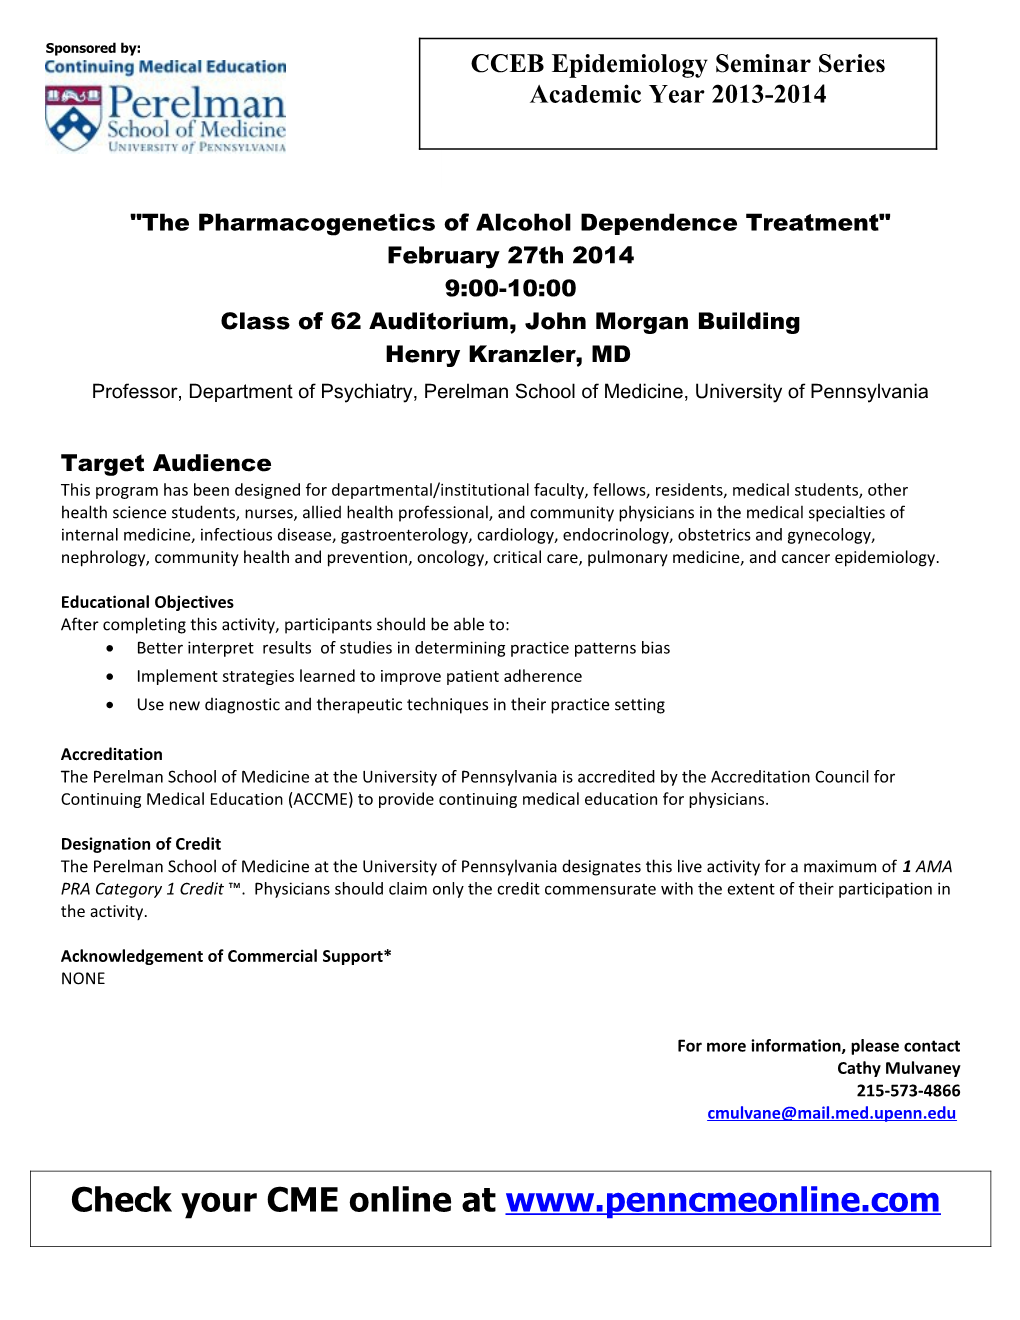 The Pharmacogenetics of Alcohol Dependence Treatment